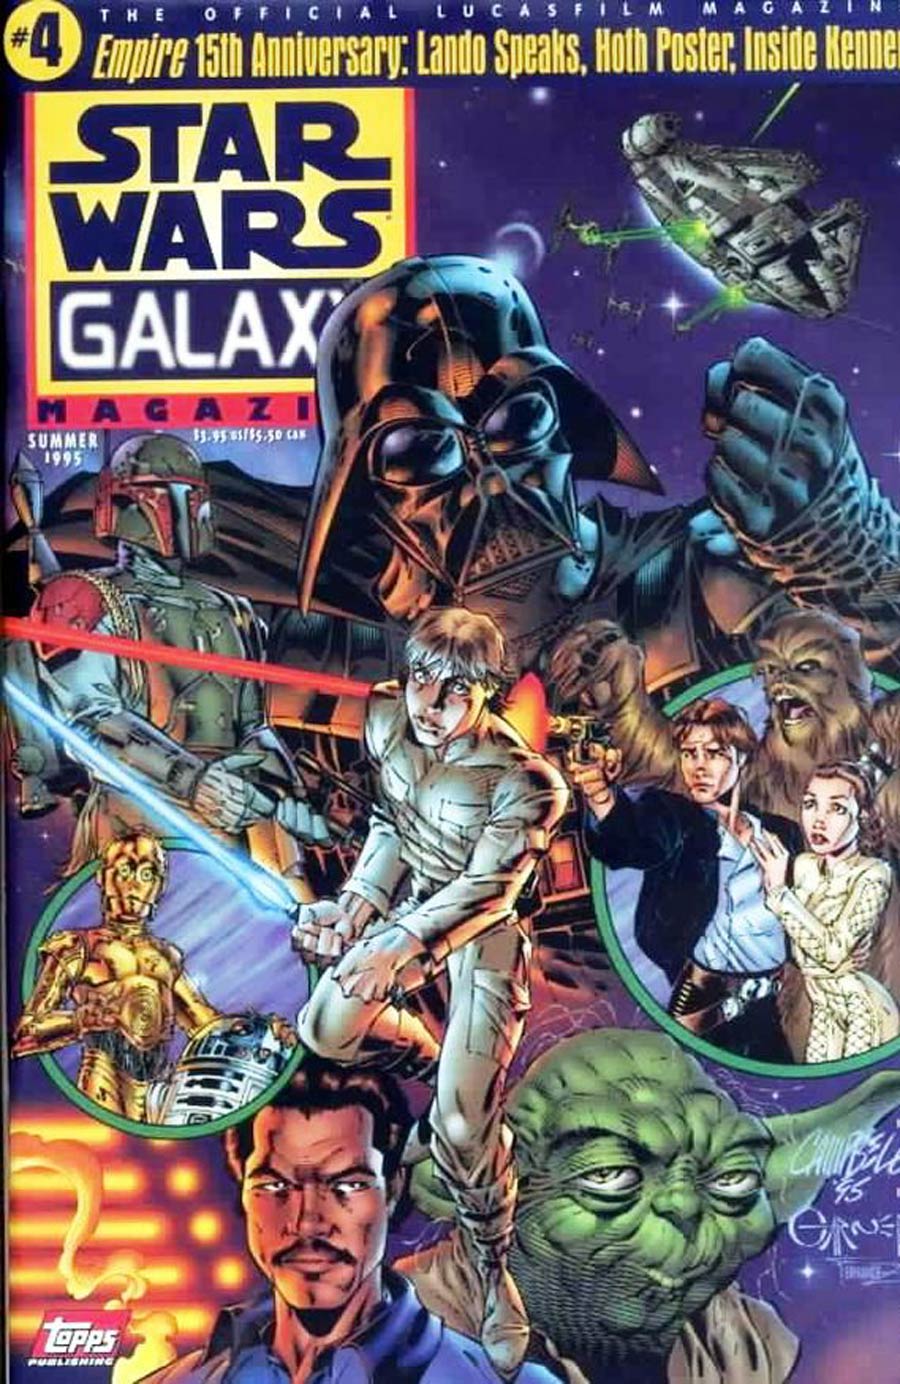 Star Wars Galaxy Magazine #4 Cover B No Polybag